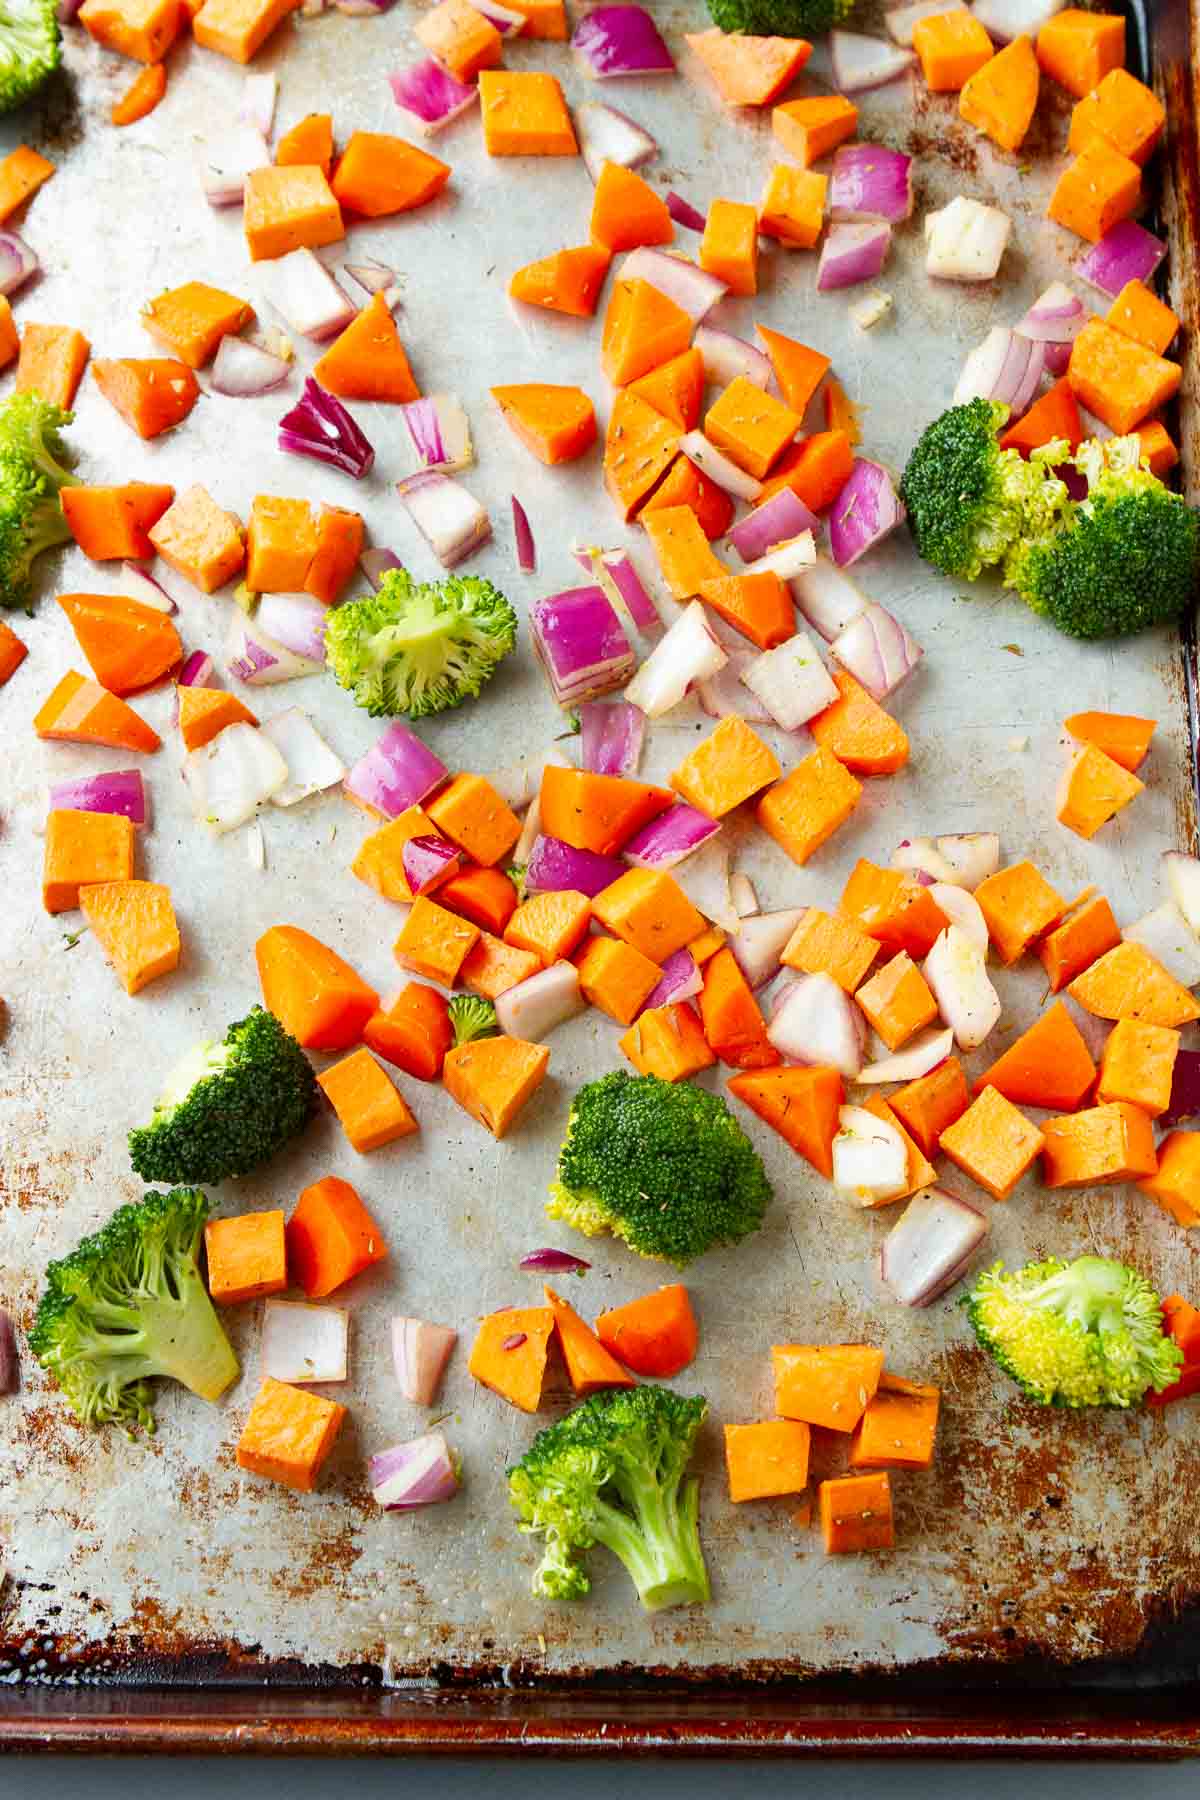 Chopped broccoli, sweet potato and red onion on a baking sheet.